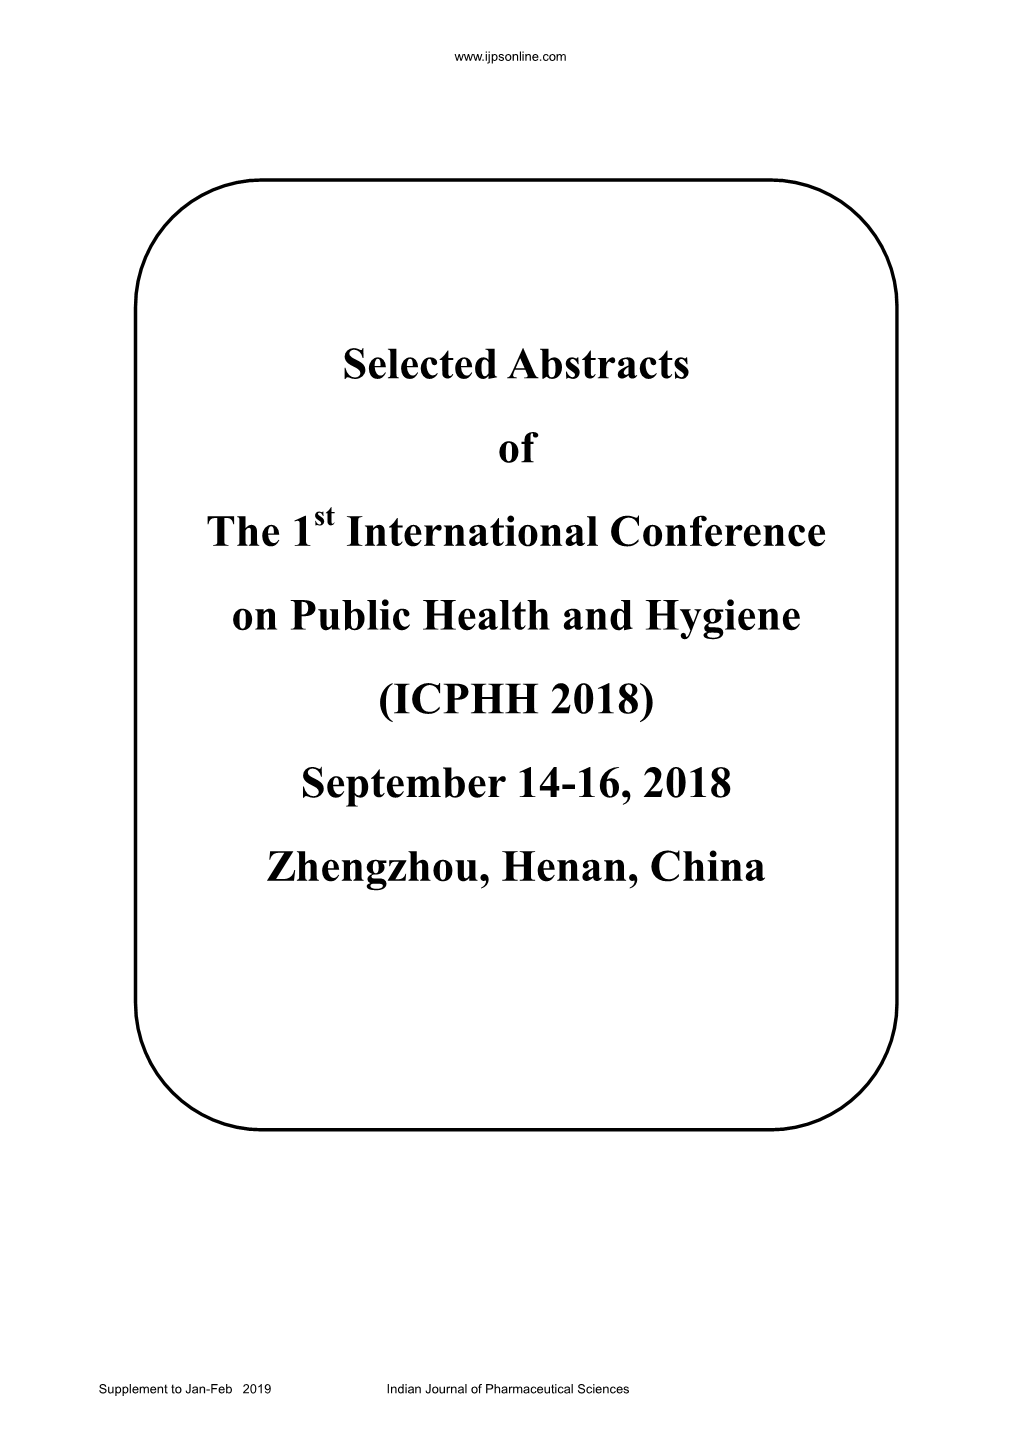 International Conference on Public Health and Hygiene (ICPHH 2018) September 14-16, 2018 Zhengzhou, Henan, China